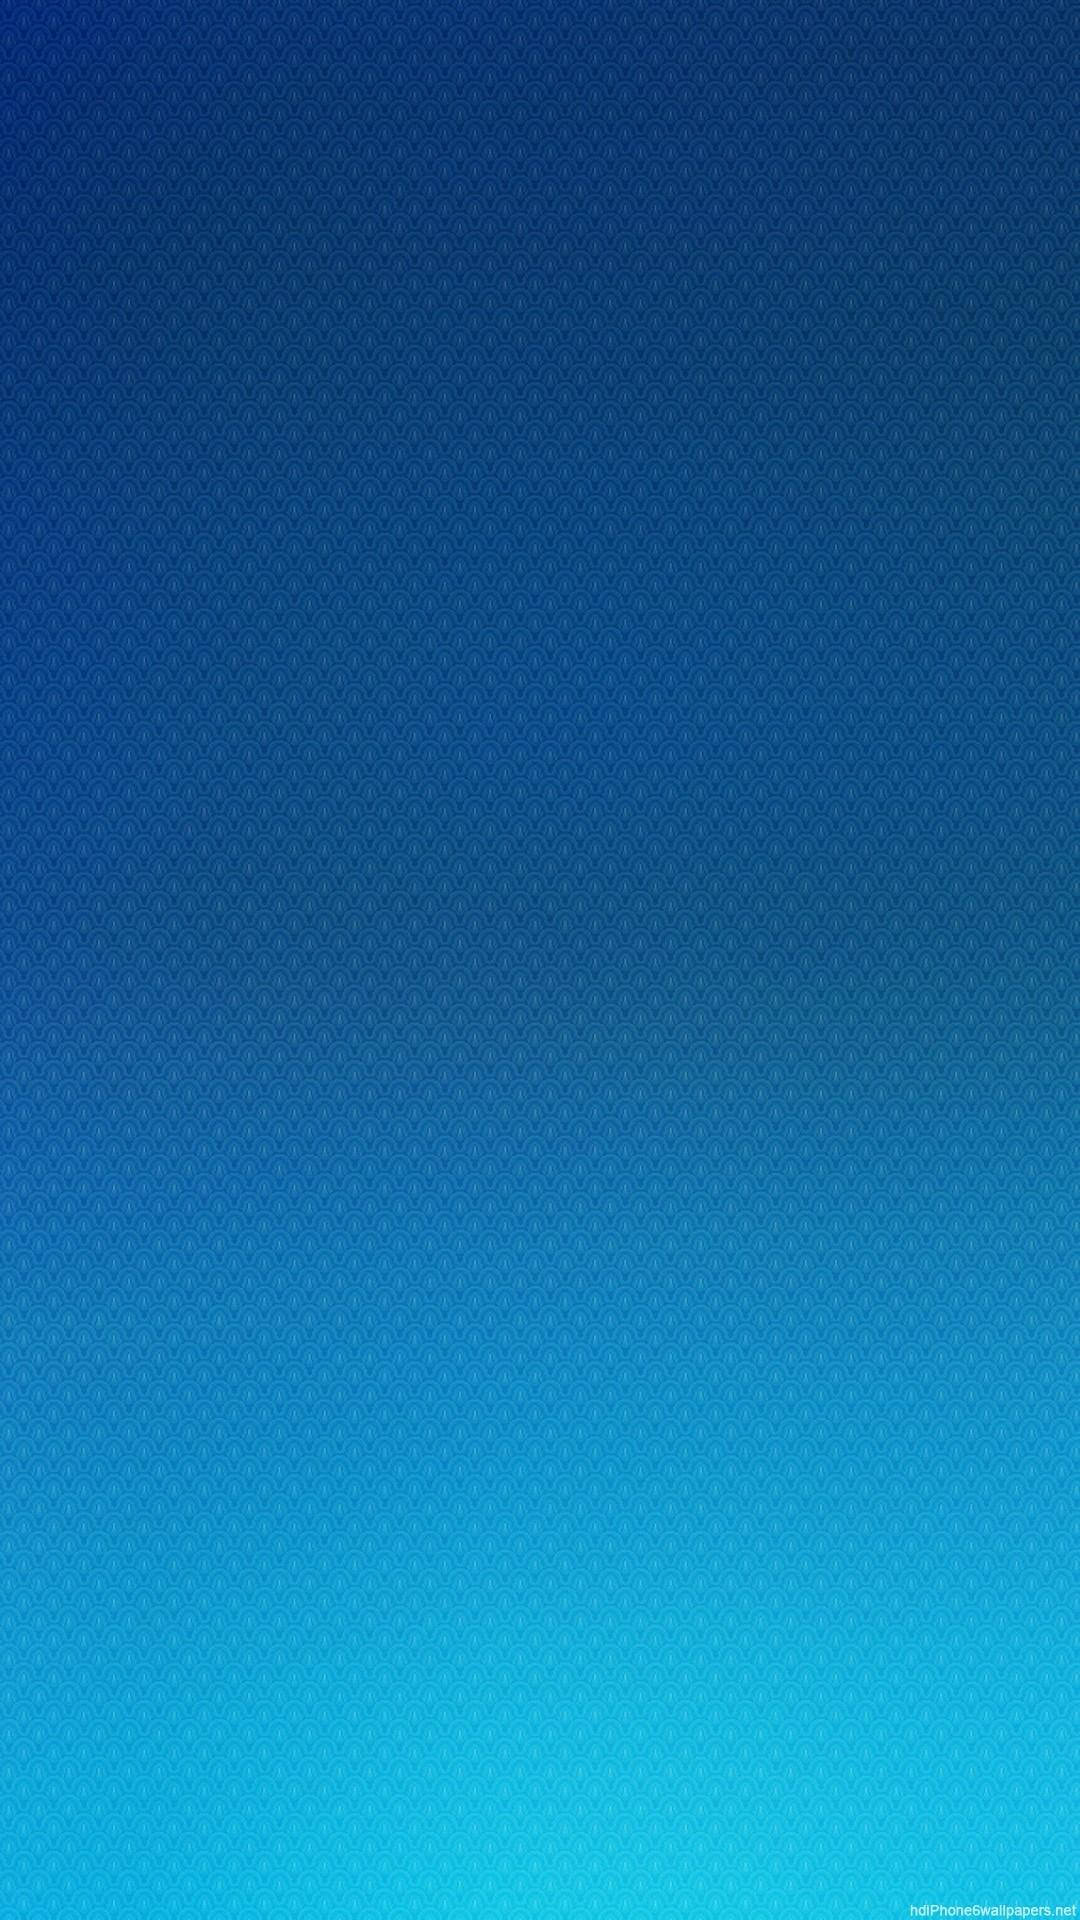 Gradient Blue Iphone 6s Plus Wallpaper